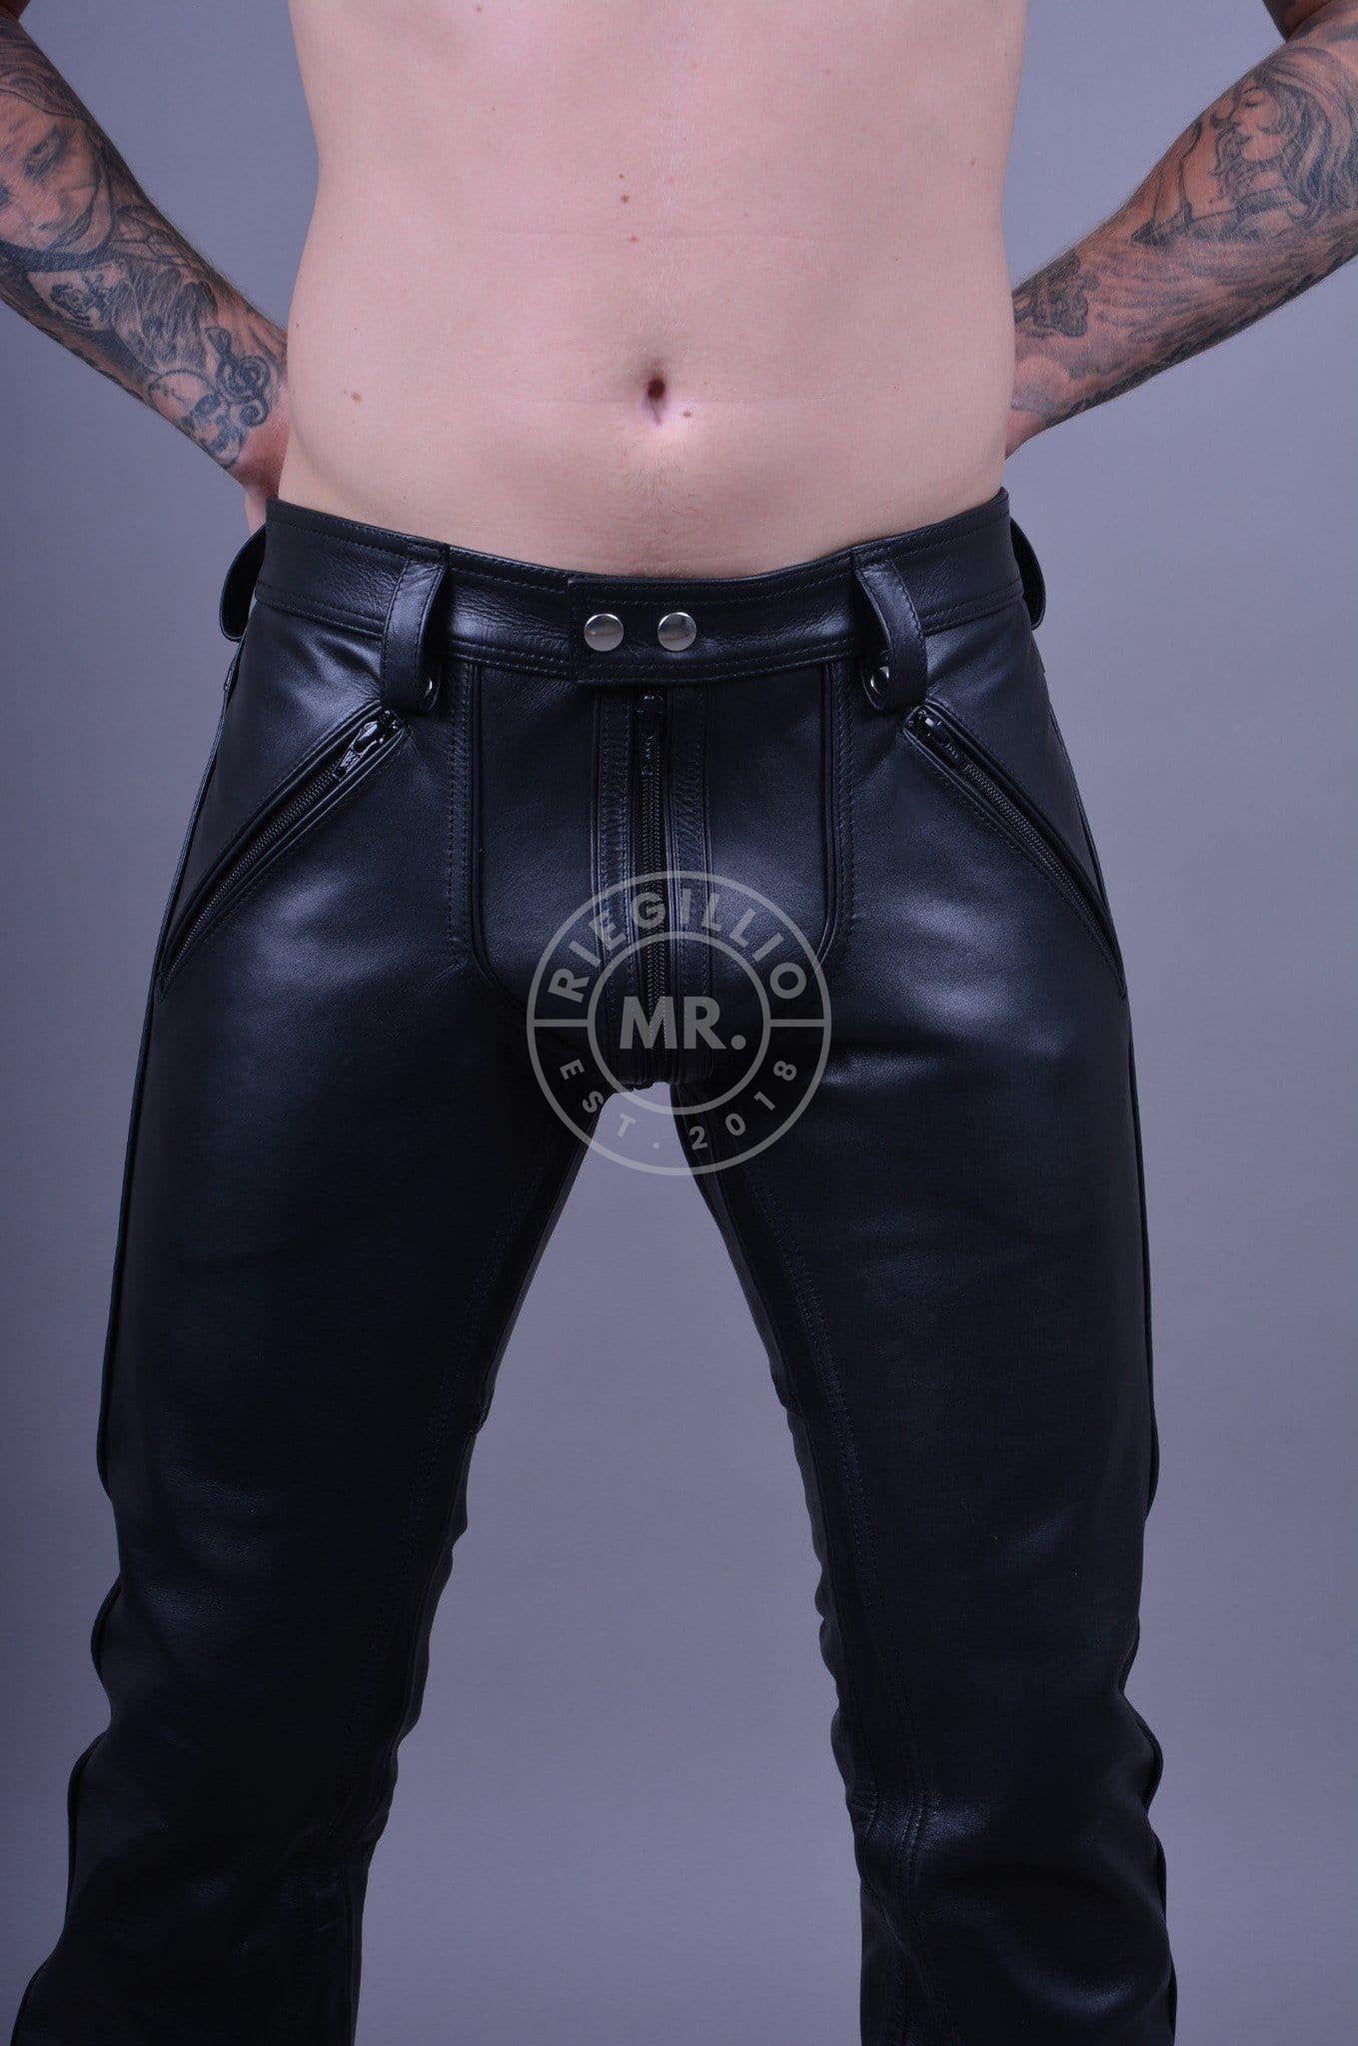 Mister B Leather FXXXer Jeans All Black-at MR. Riegillio